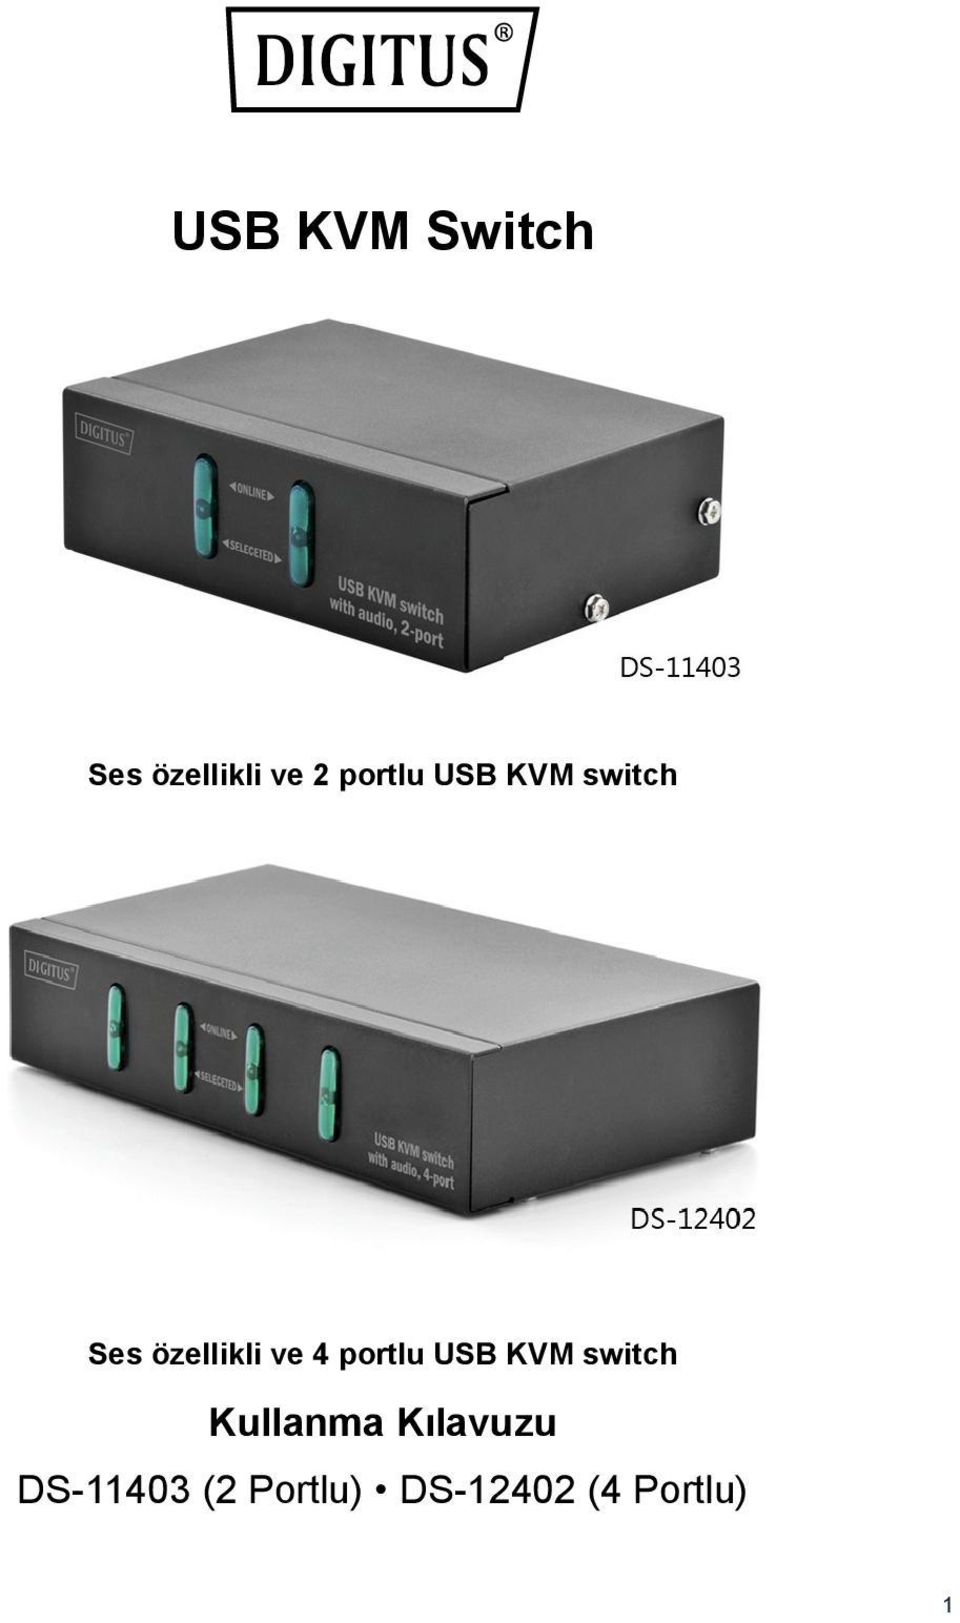 4 portlu USB KVM switch Kullanma